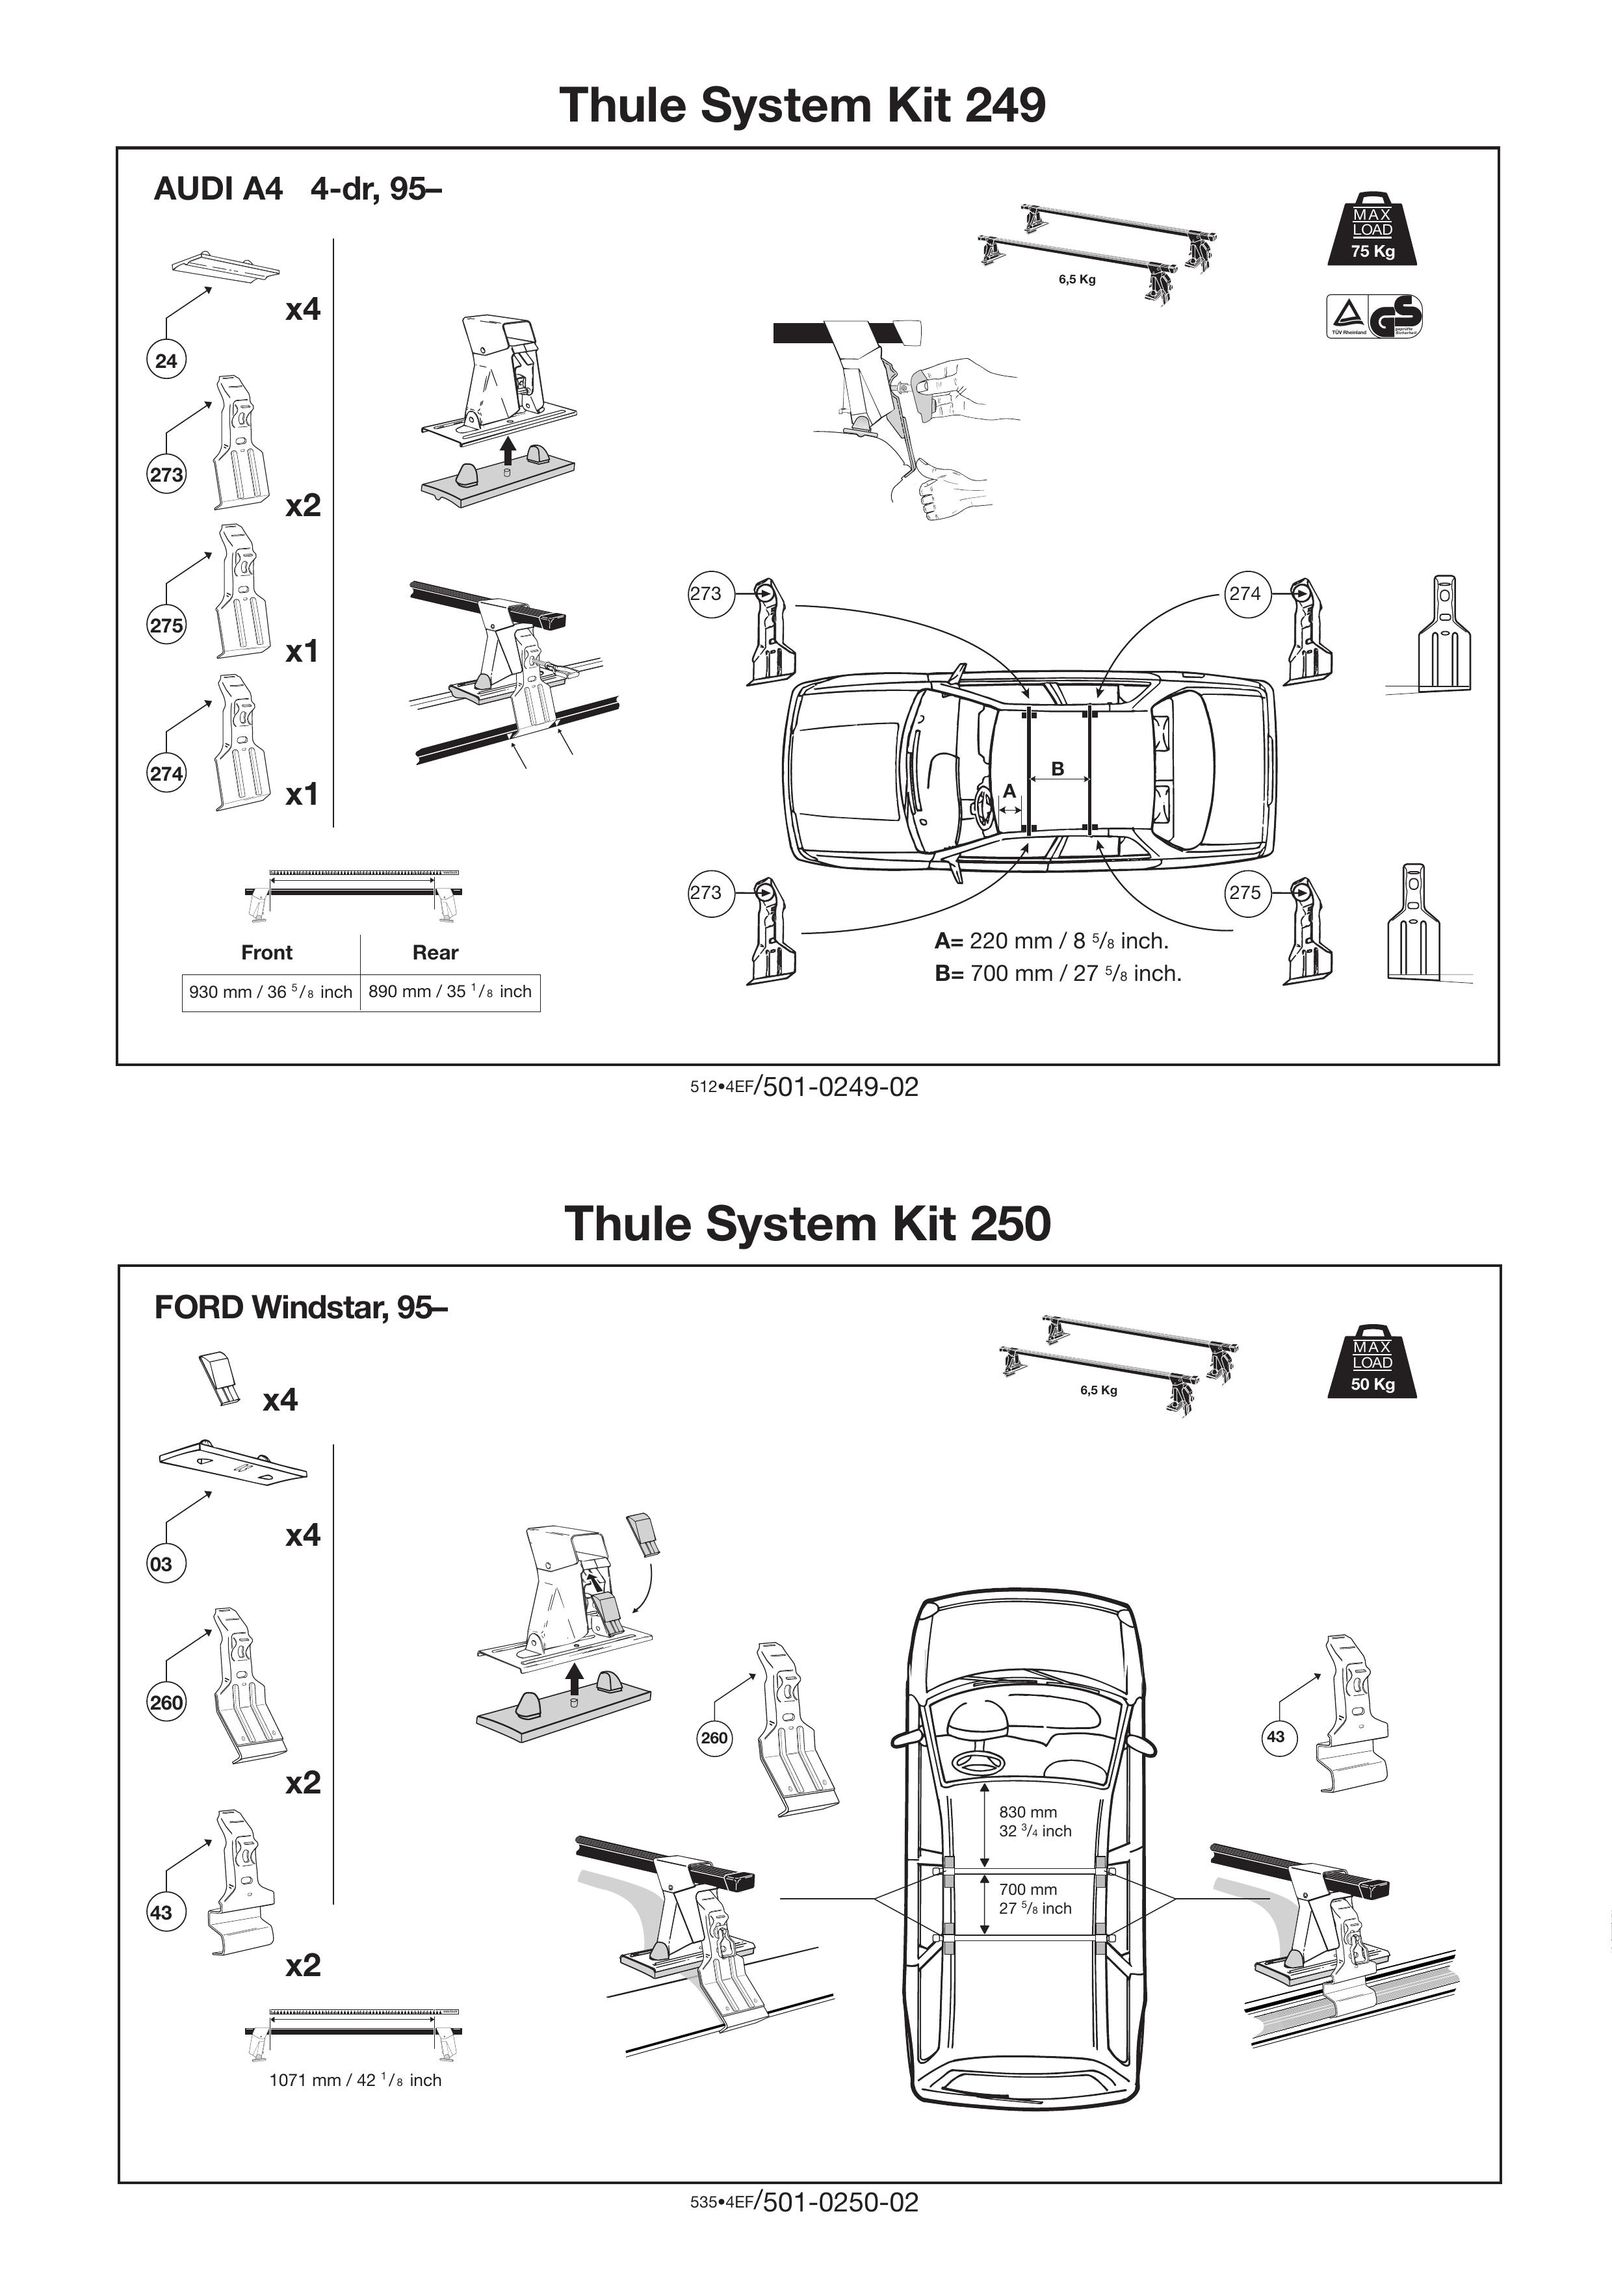 Audi 5354EF/501-0250-02 Bike Rack User Manual (Page 1)